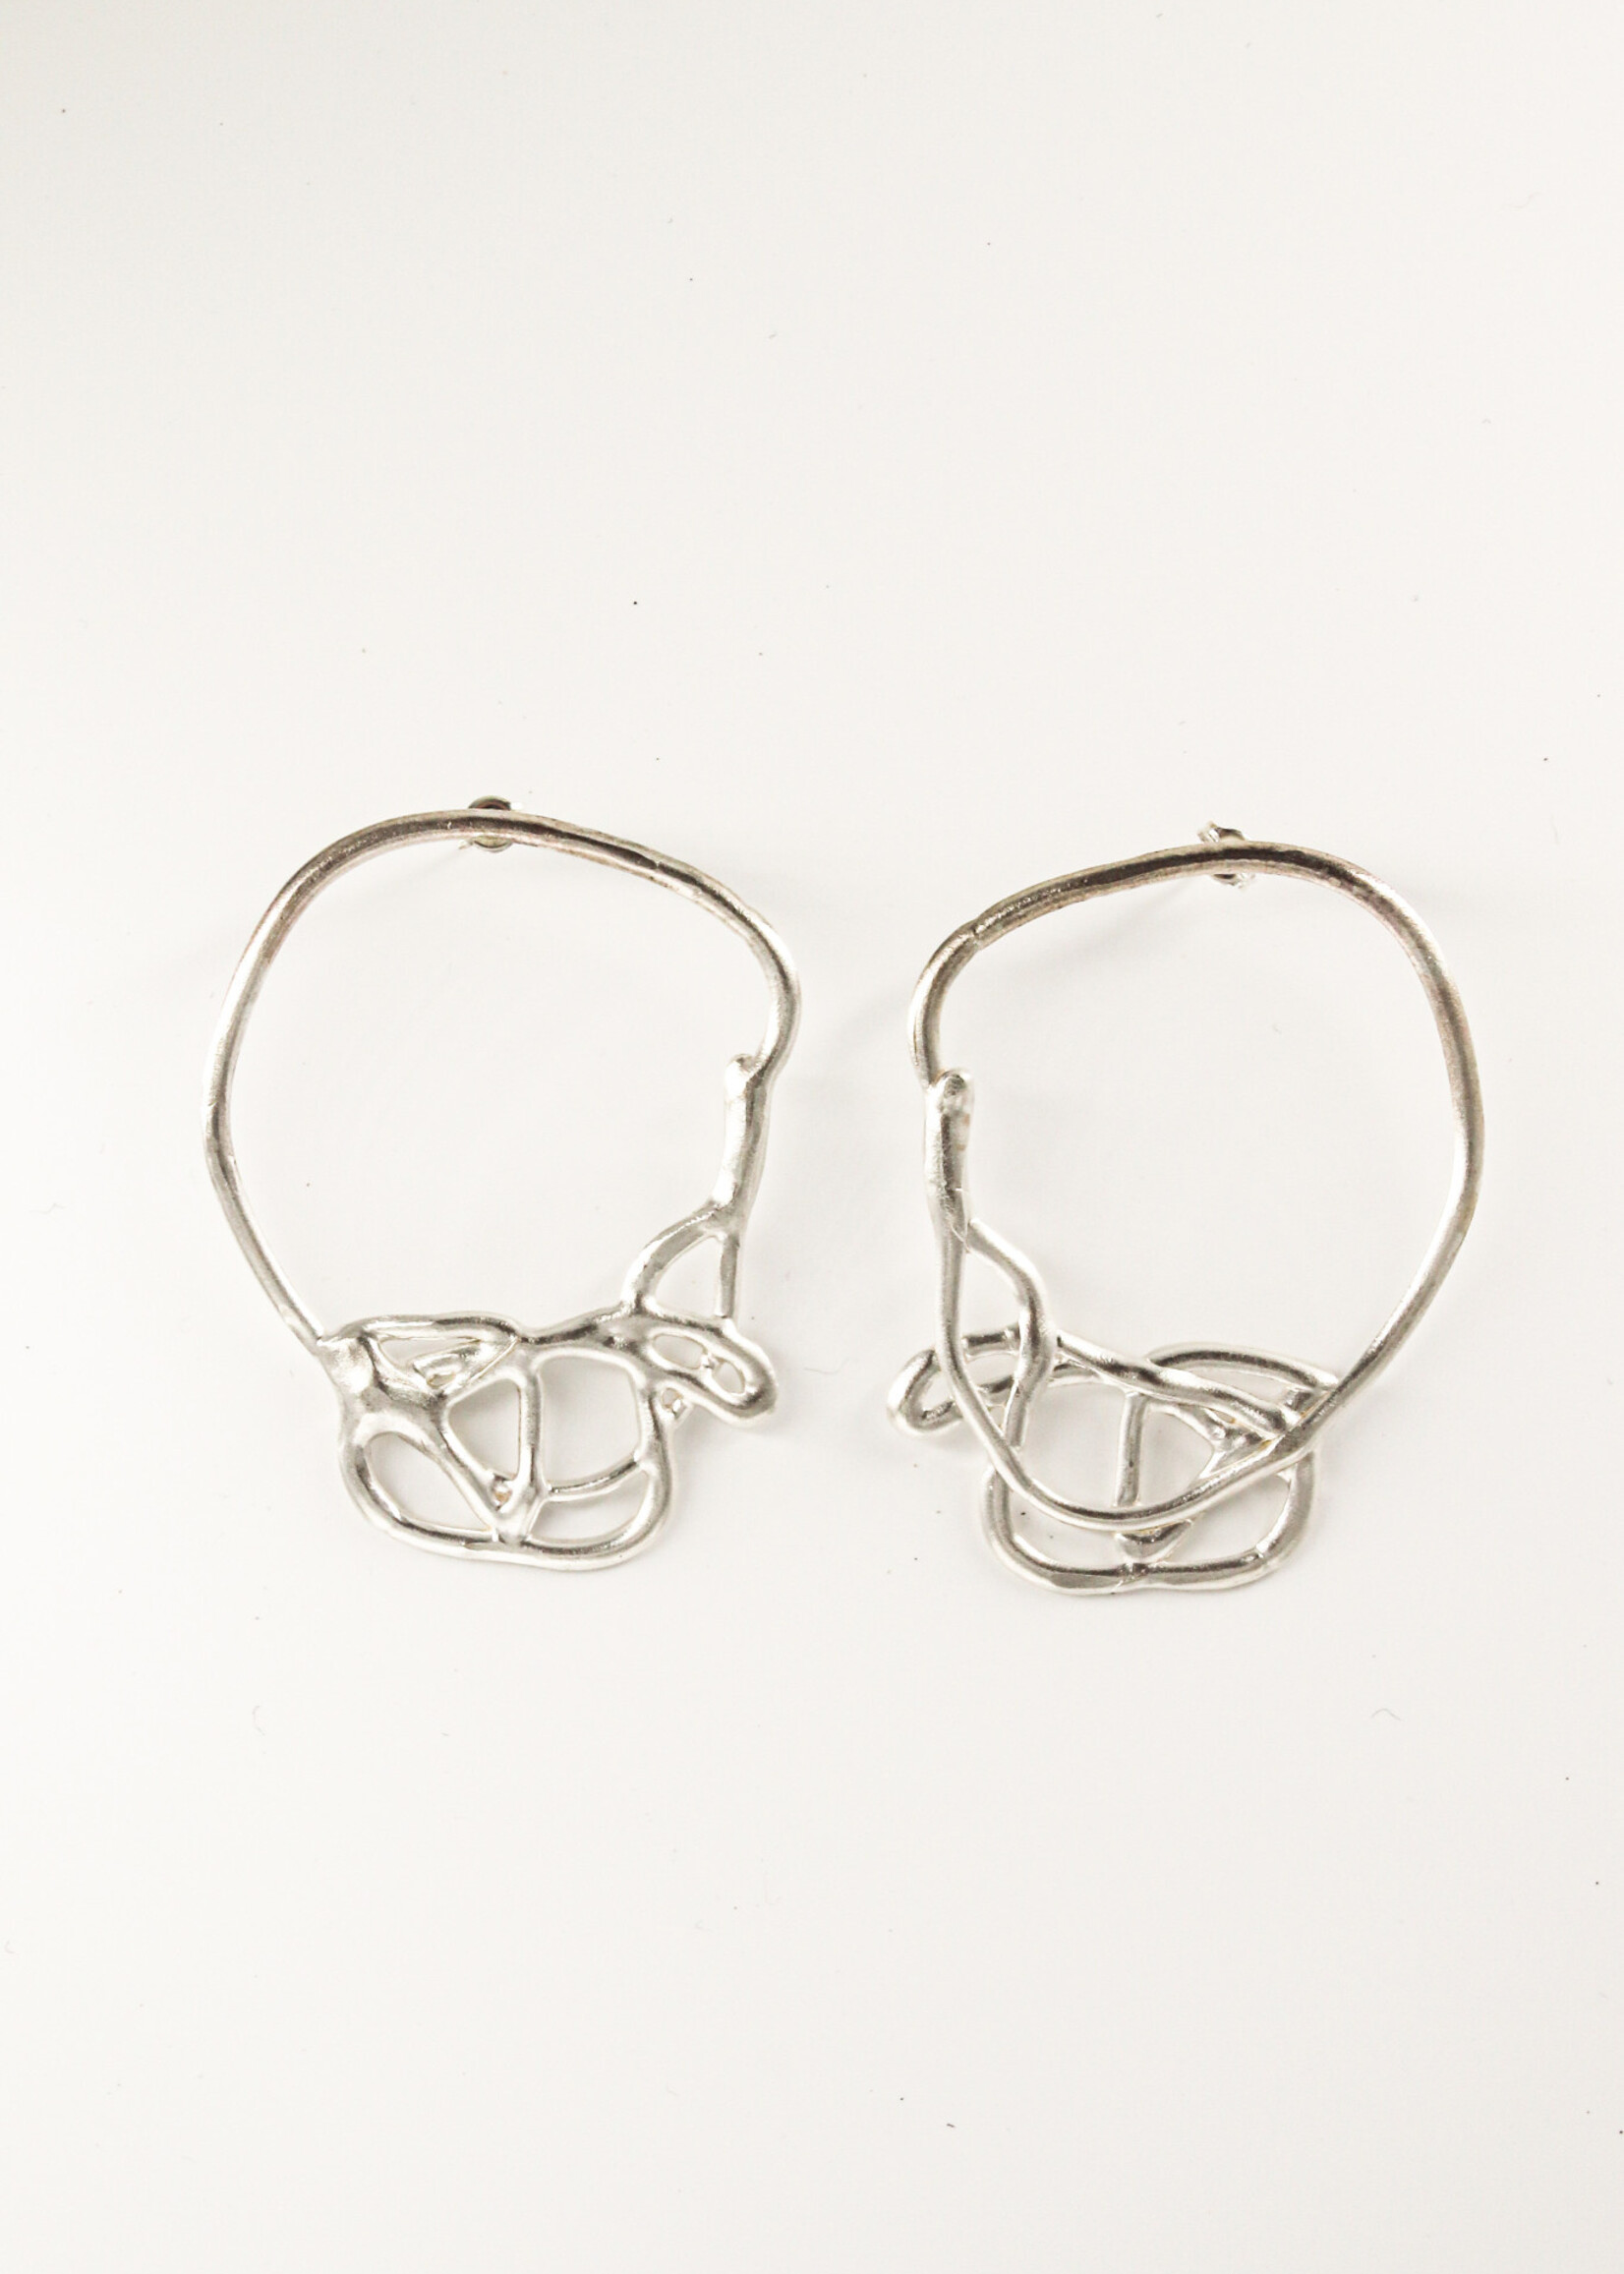 Sydnie Wainland Silver Hydro Abstract Earrings